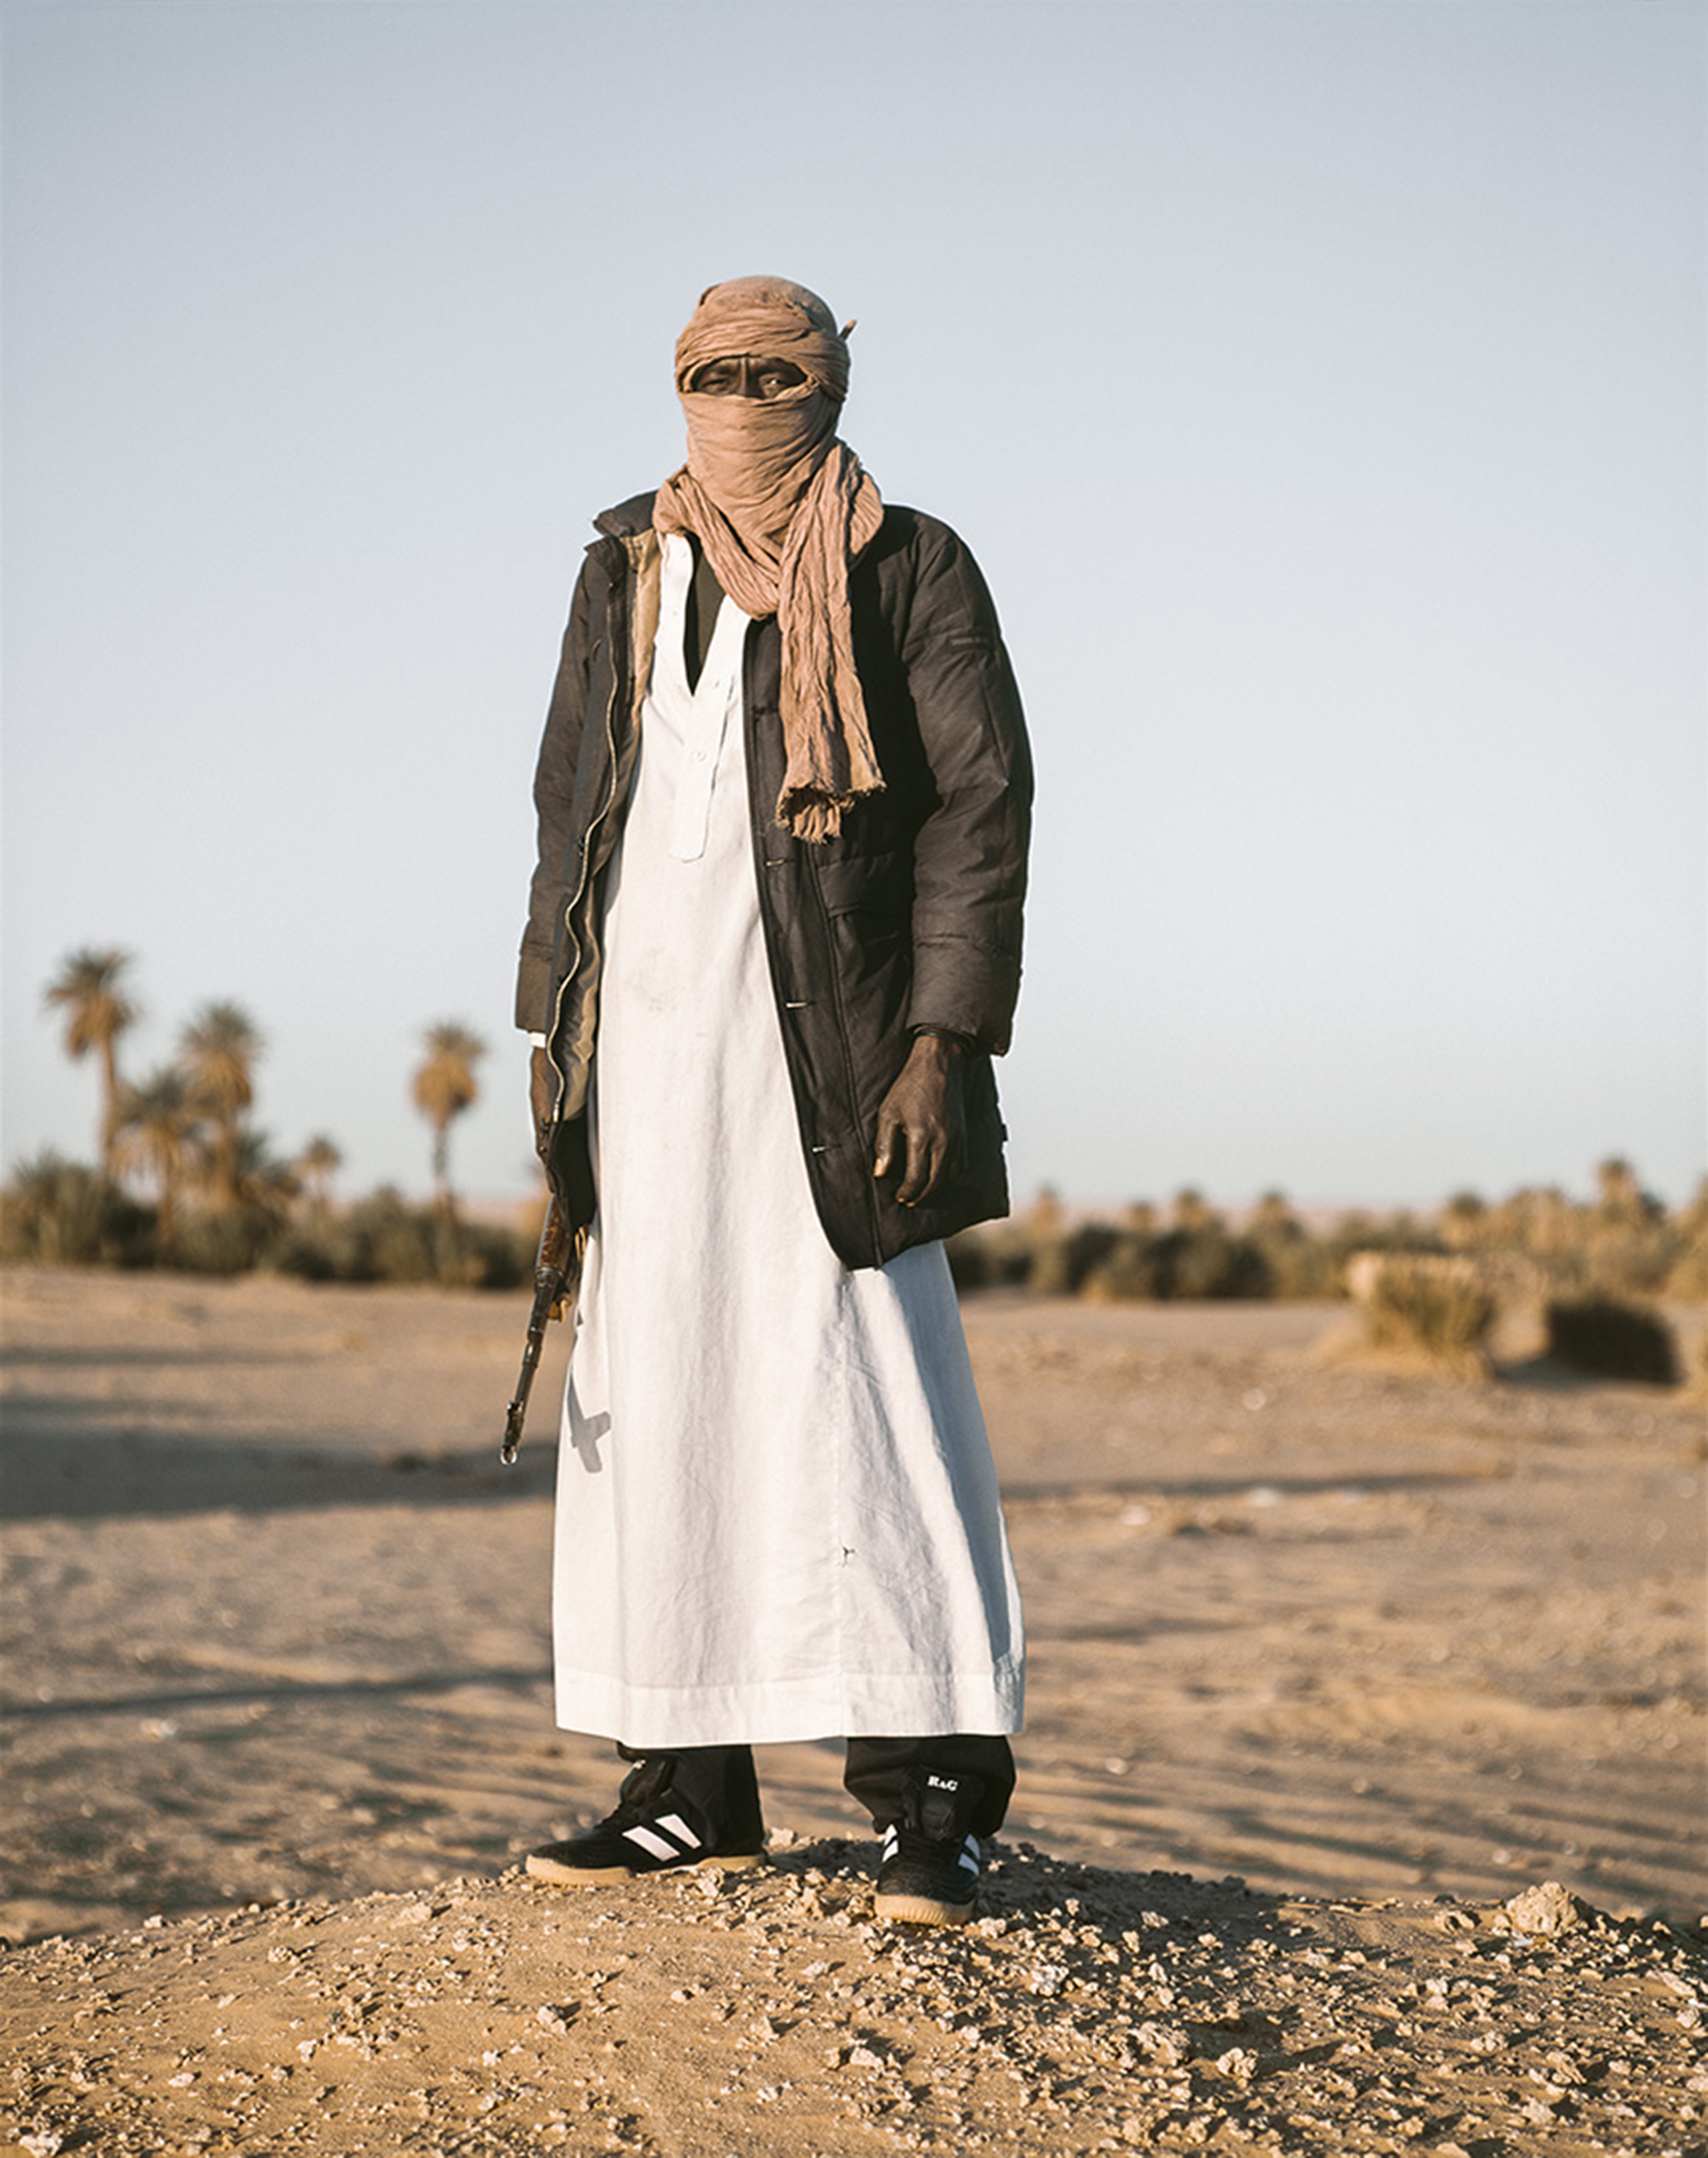 A local Tebu truck driver, Southern Libya, March 2015.